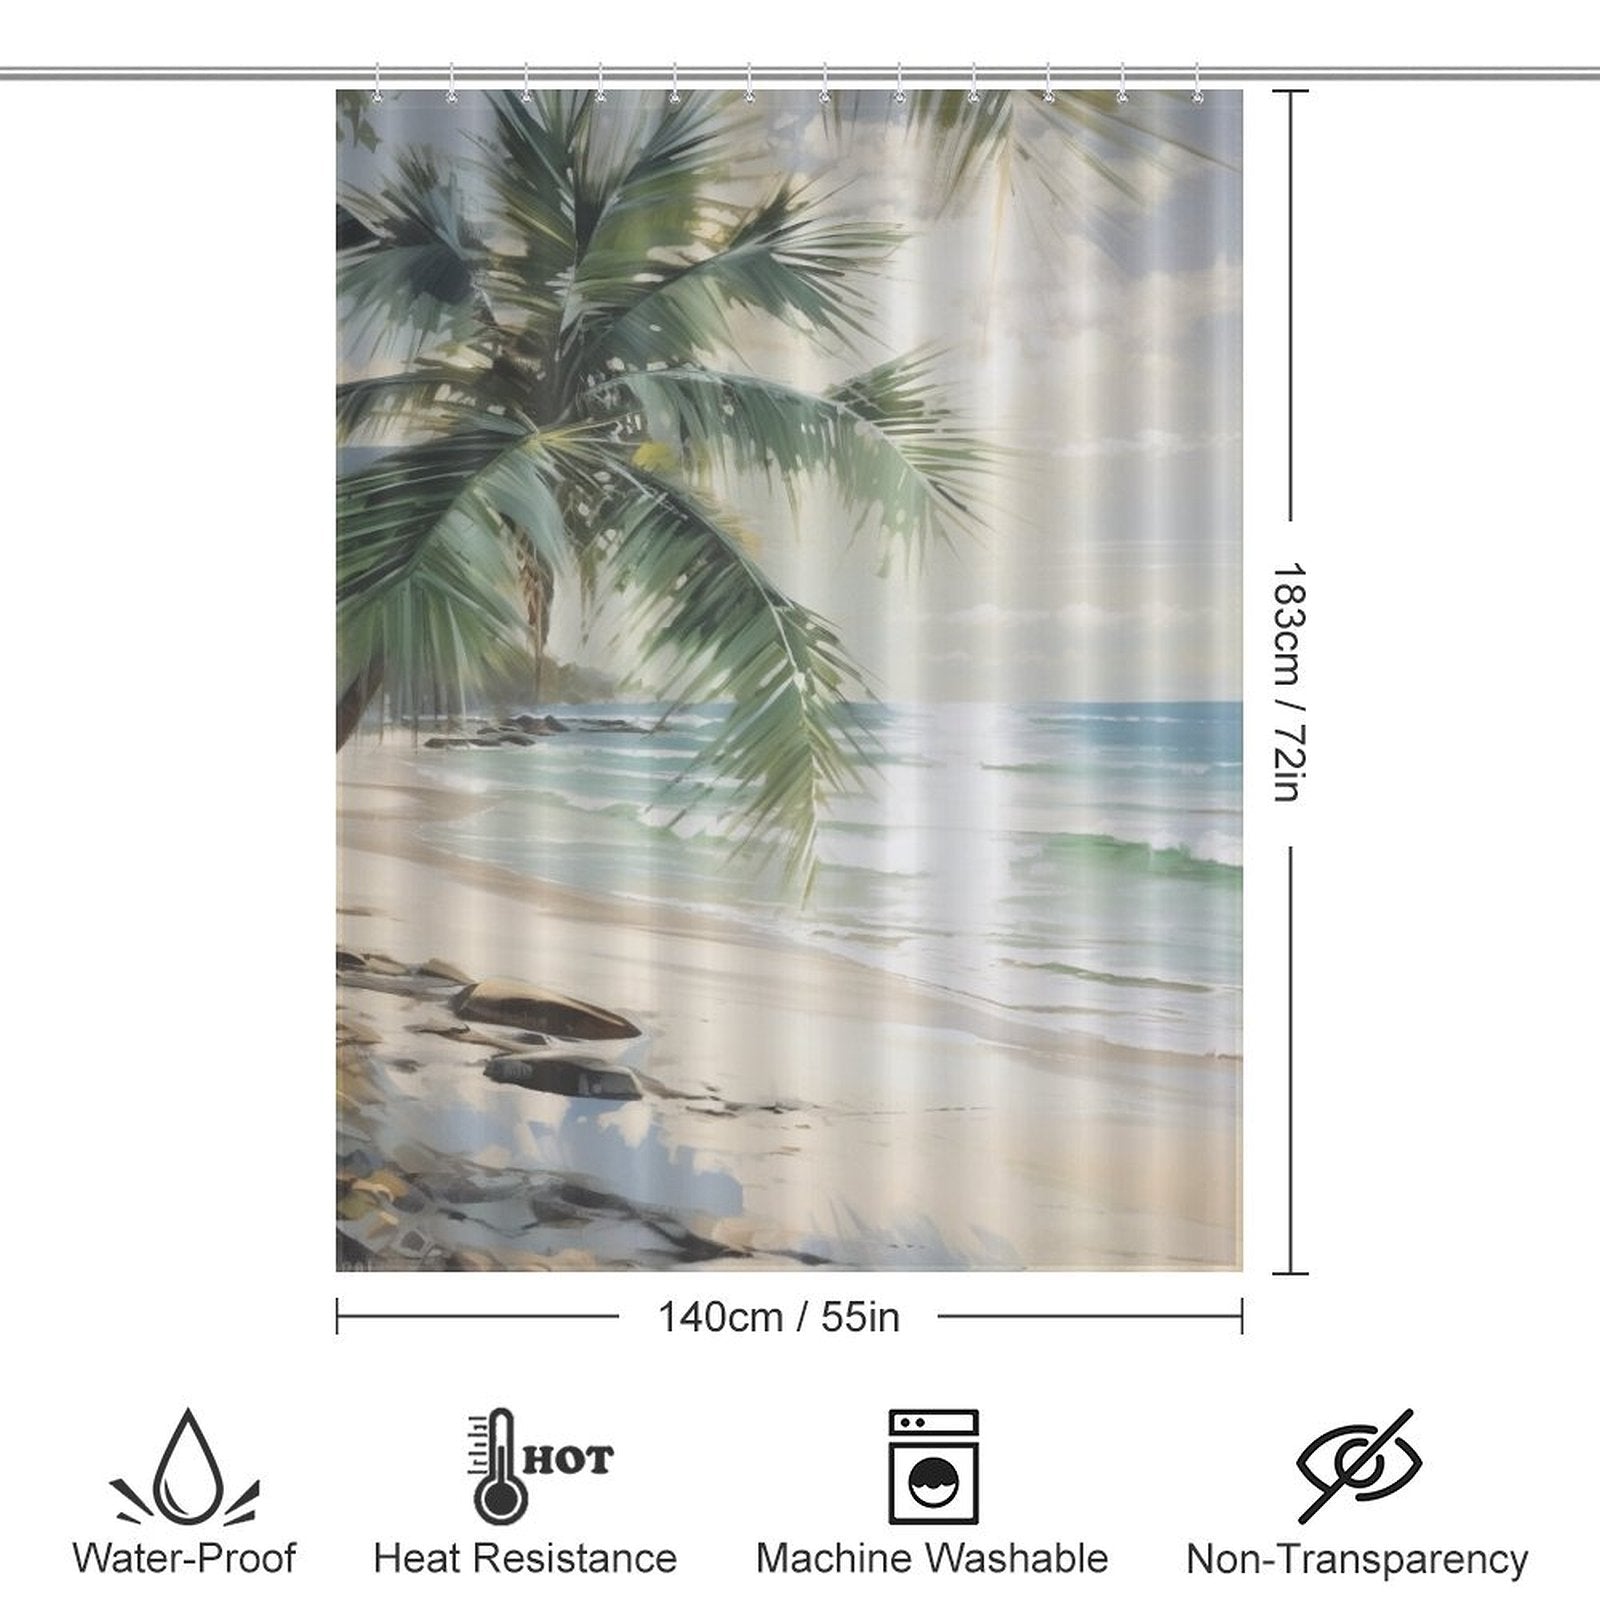 Island Life Palm Canopy Shower Curtain